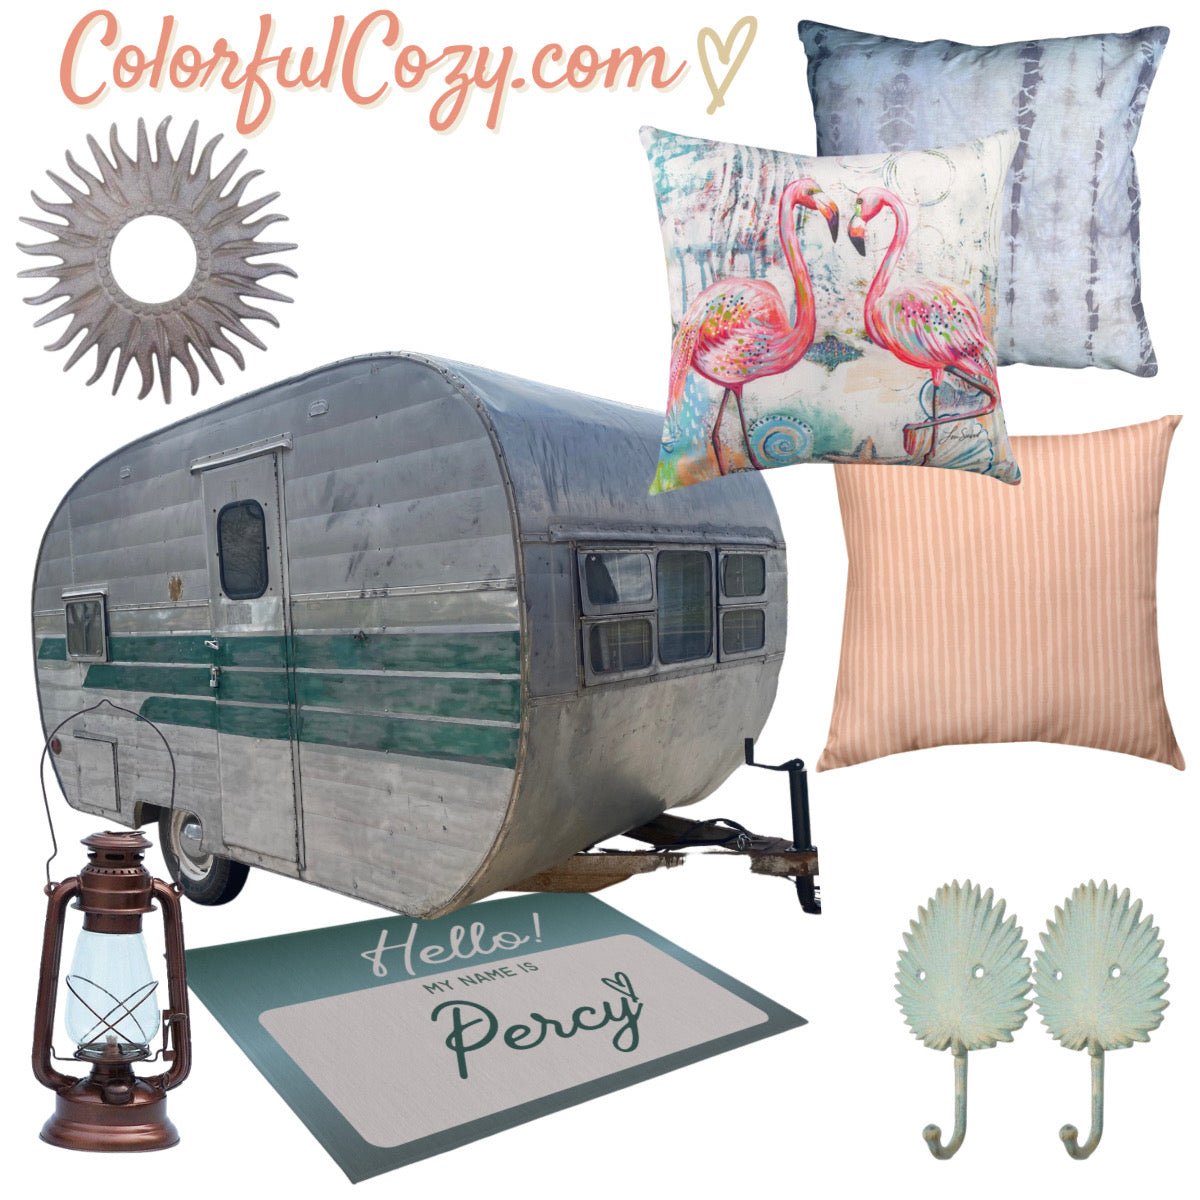 Brown Custom Outdoor Rug for your Campervan, RV, Vintage Trailer, Campsite, Glamping